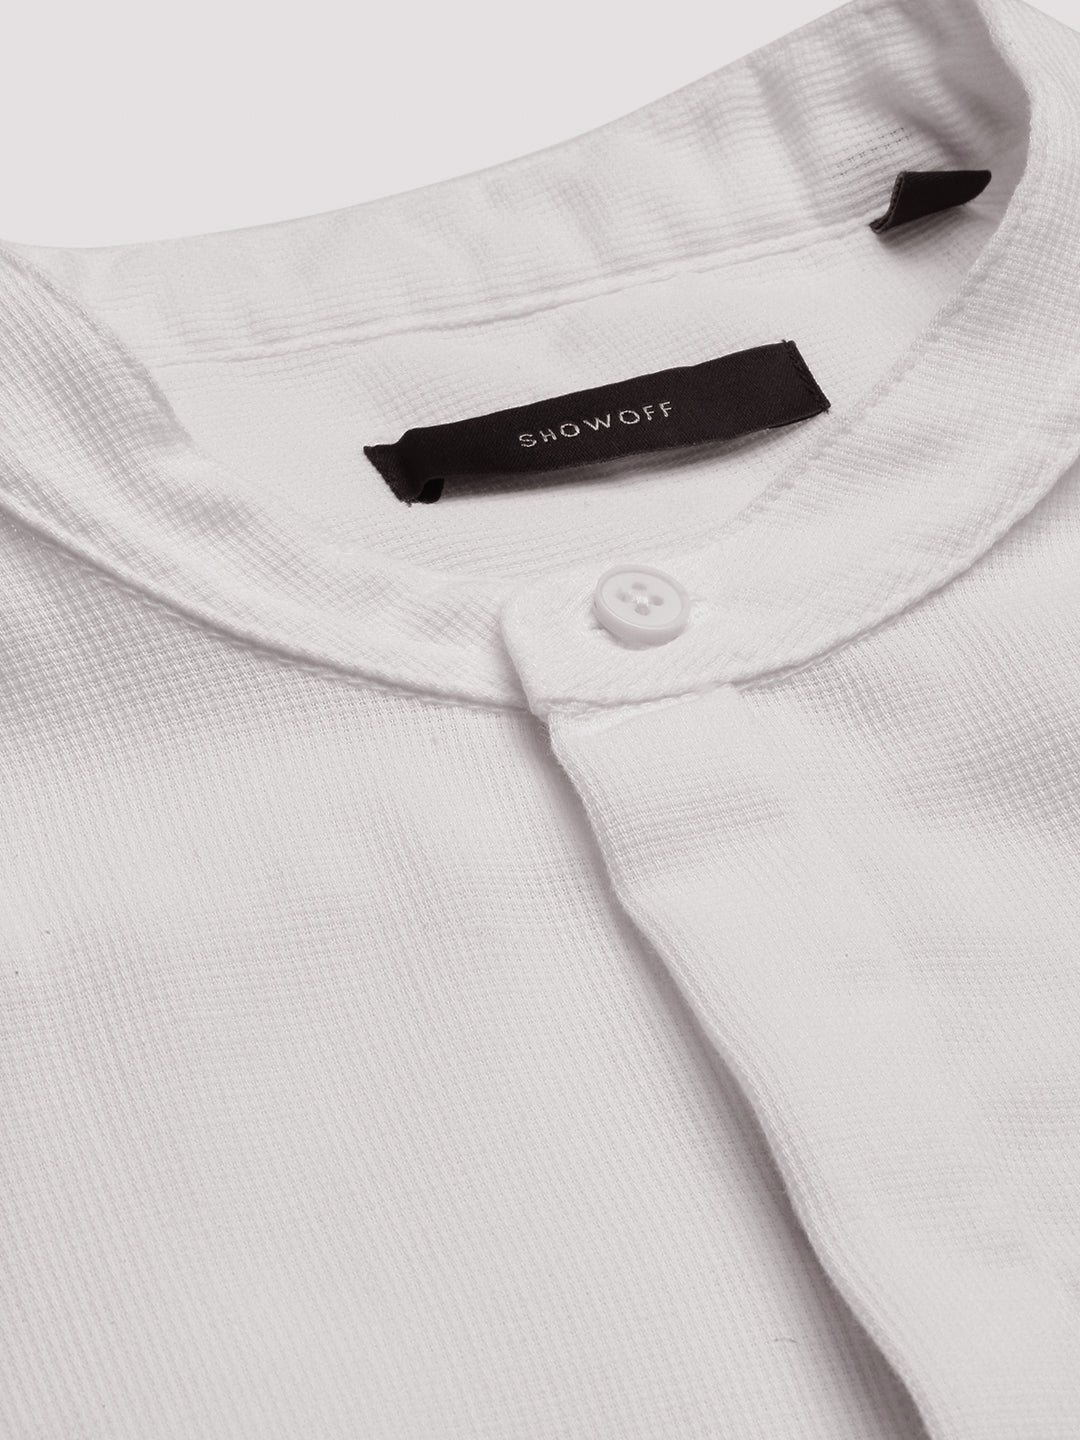 Men Mandarin Collar Solid Slim Fit White Shirt